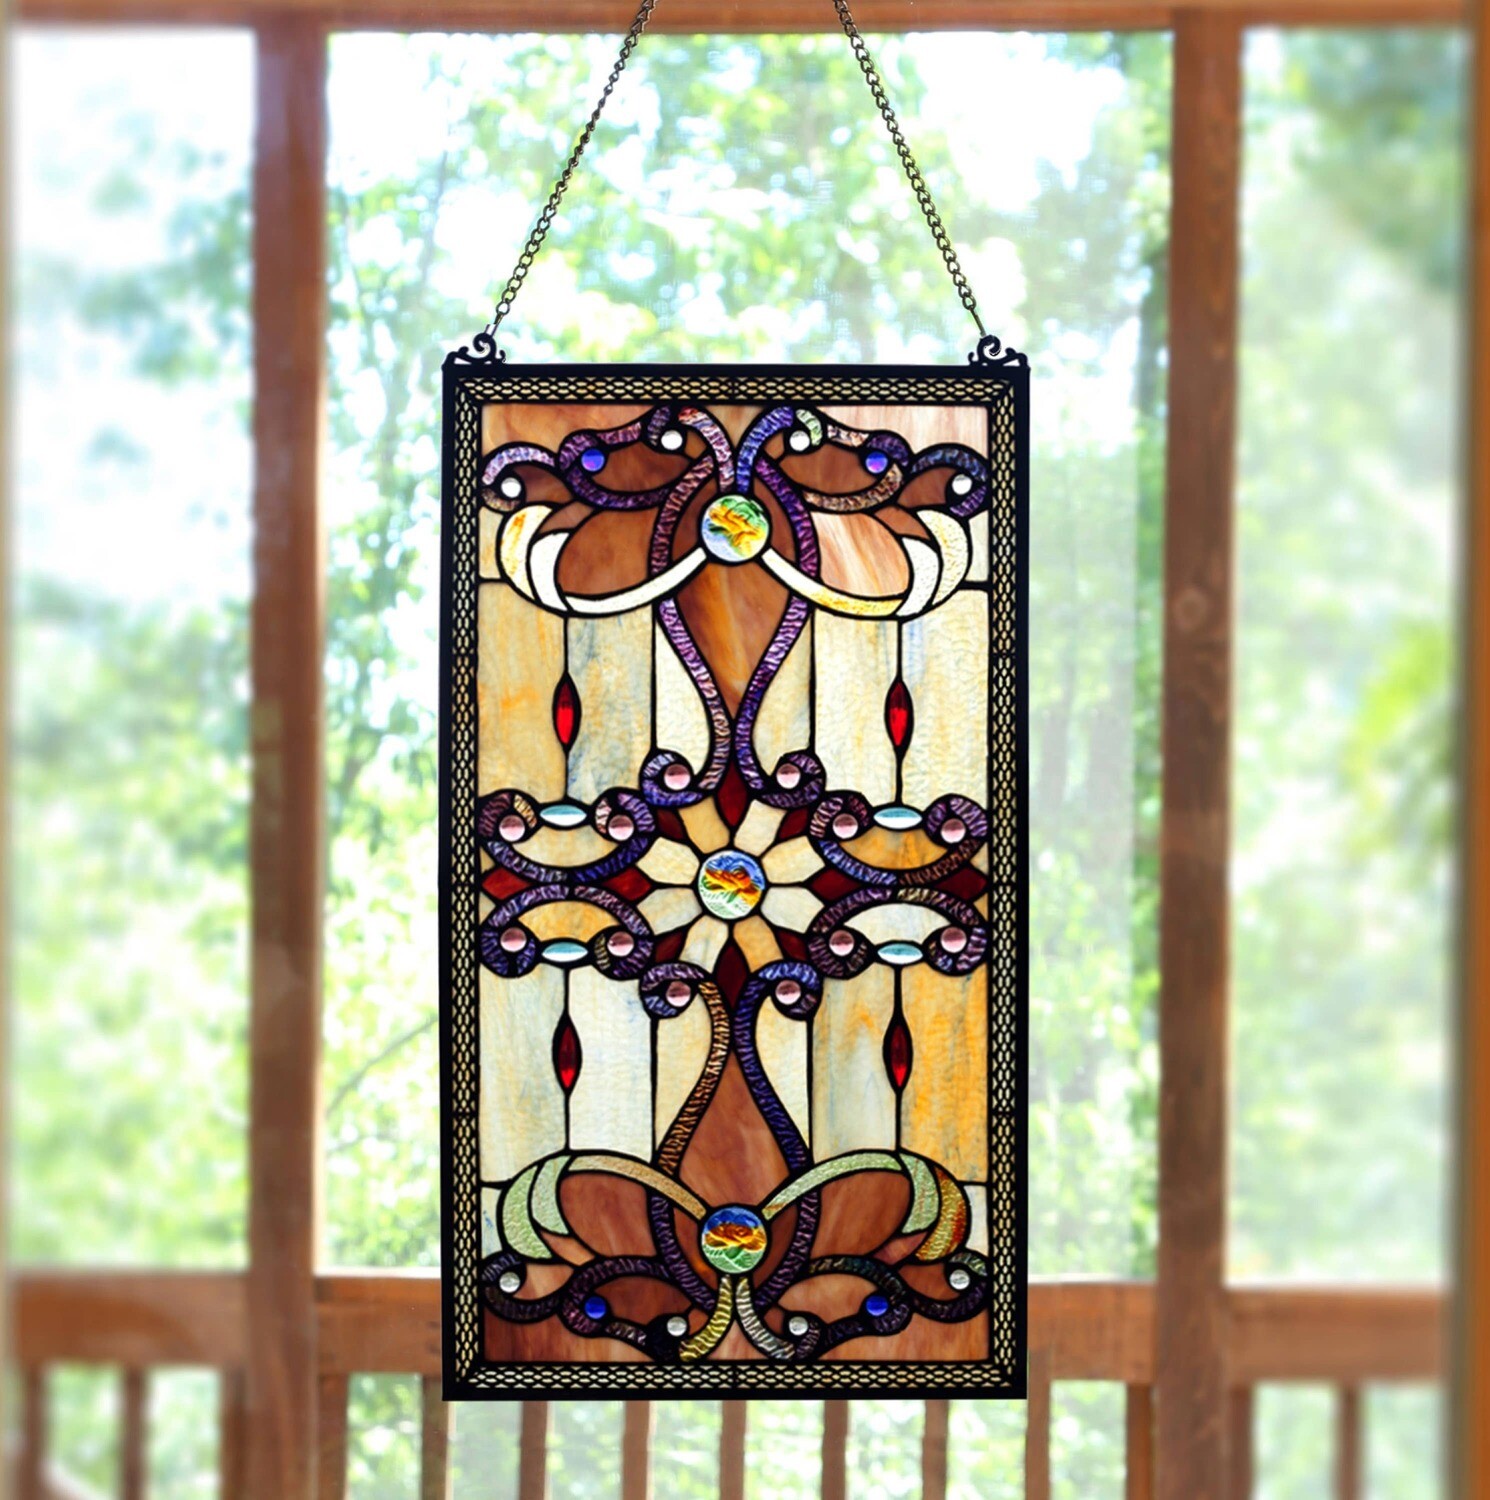 26"H Wyatt Amber Stained Glass Window Panel